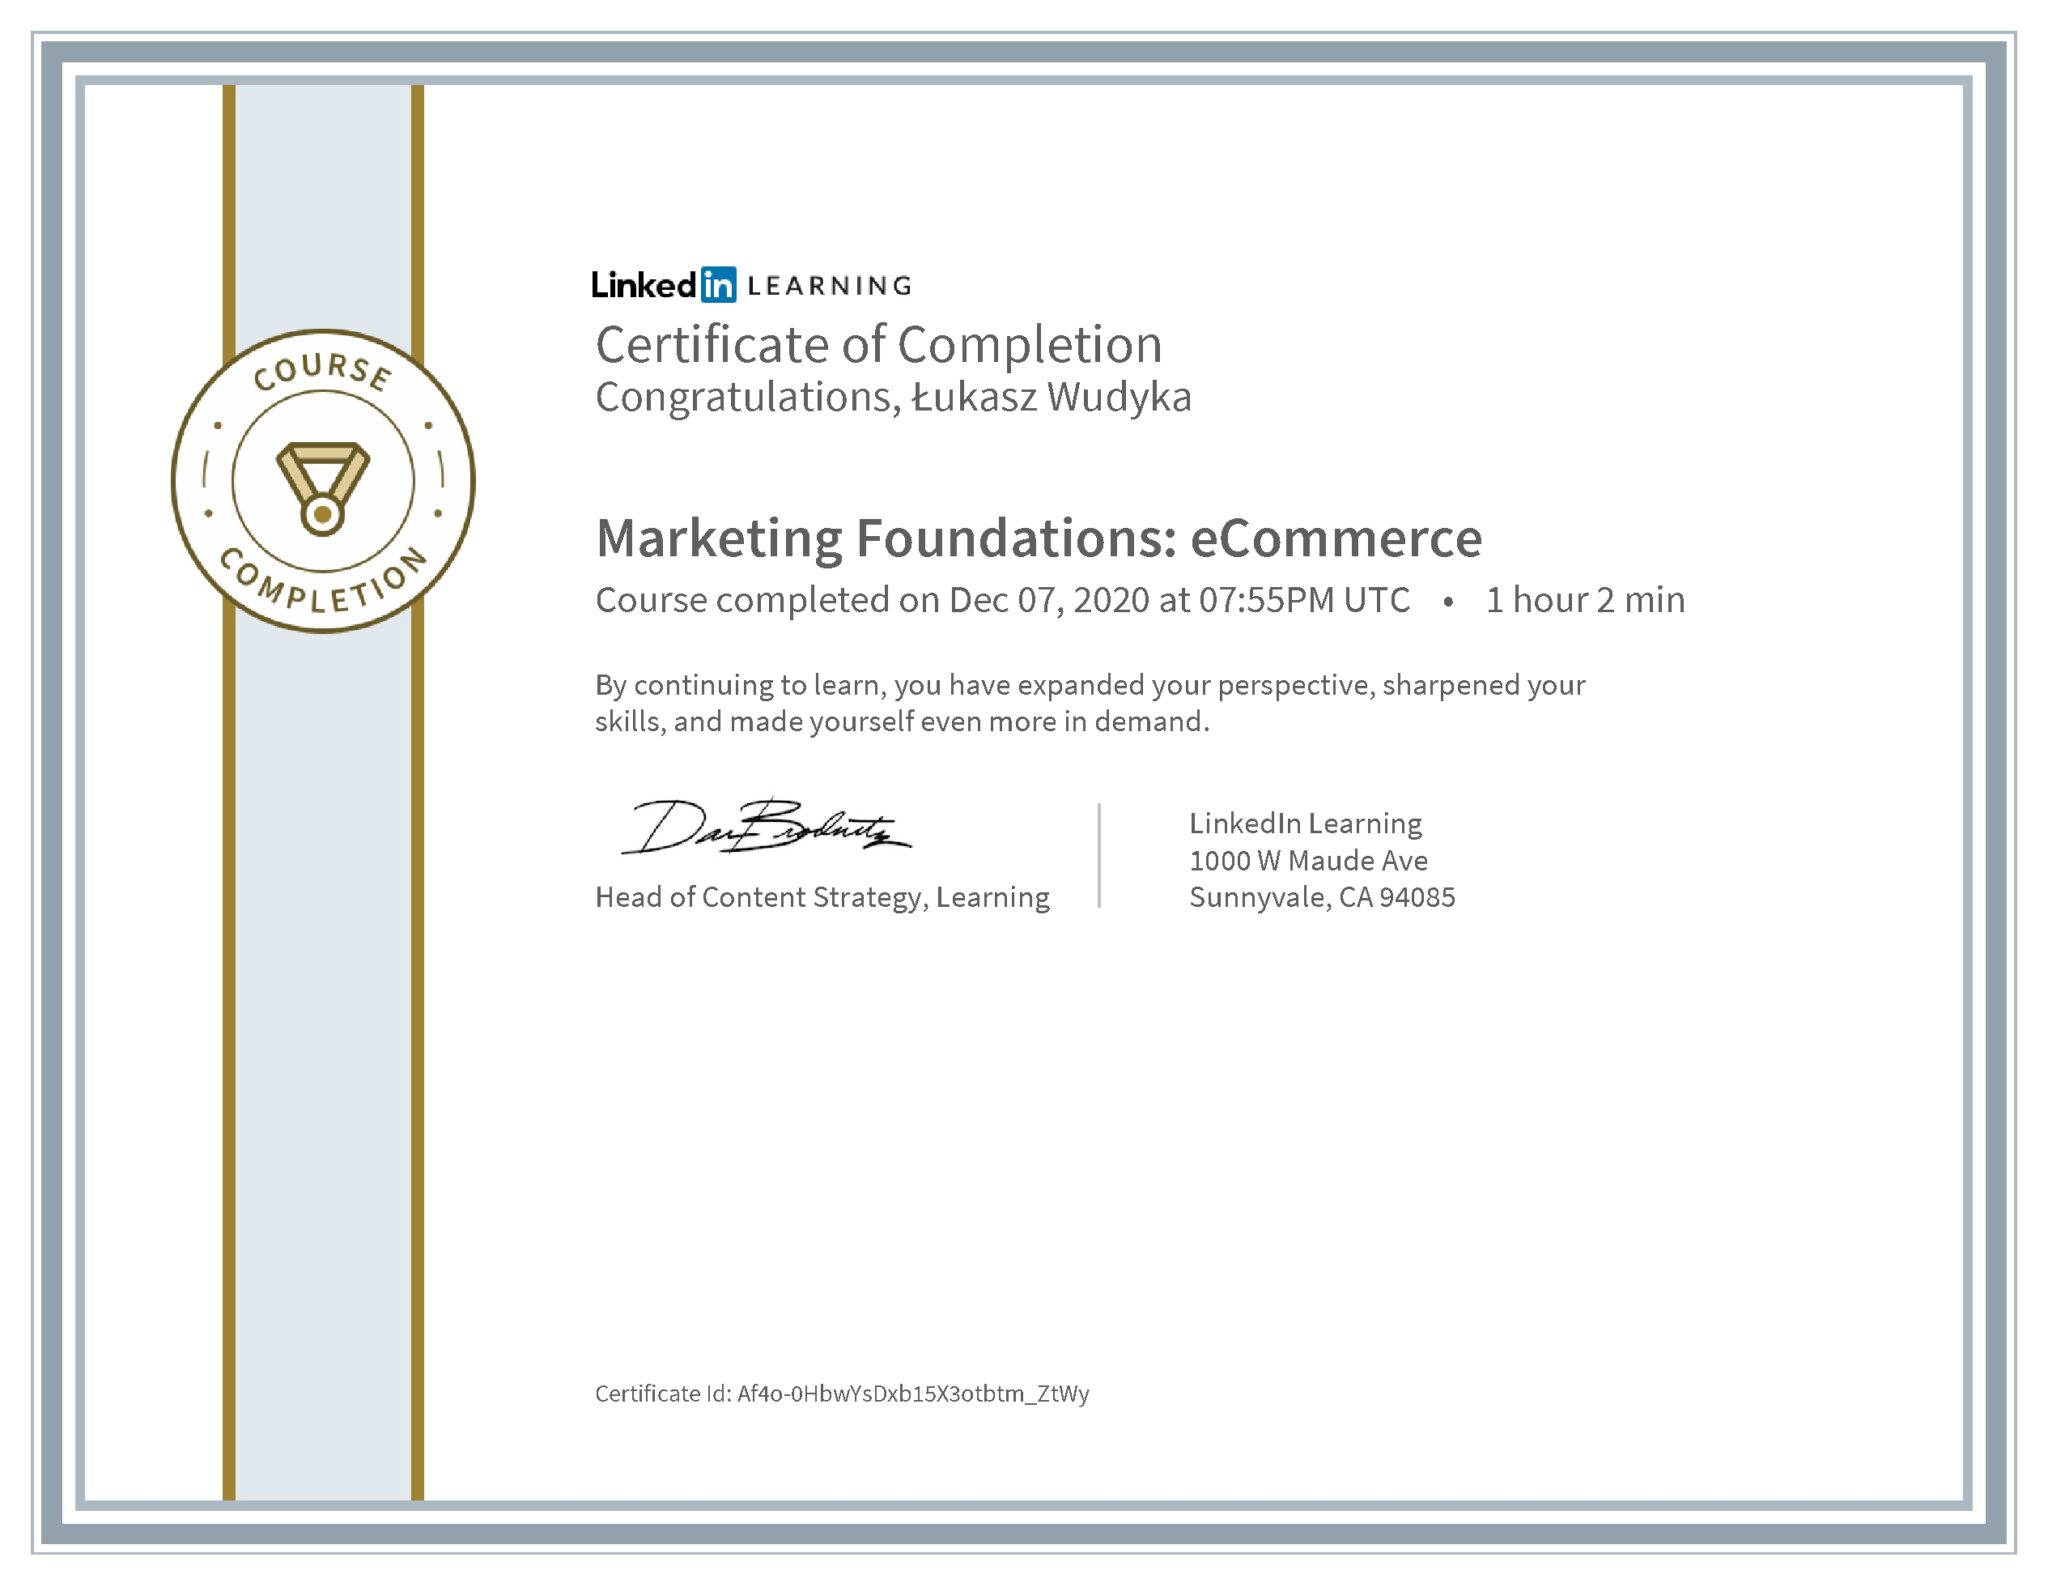 Łukasz Wudyka certyfikat LinkedIn Marketing Foundations: eCommerce